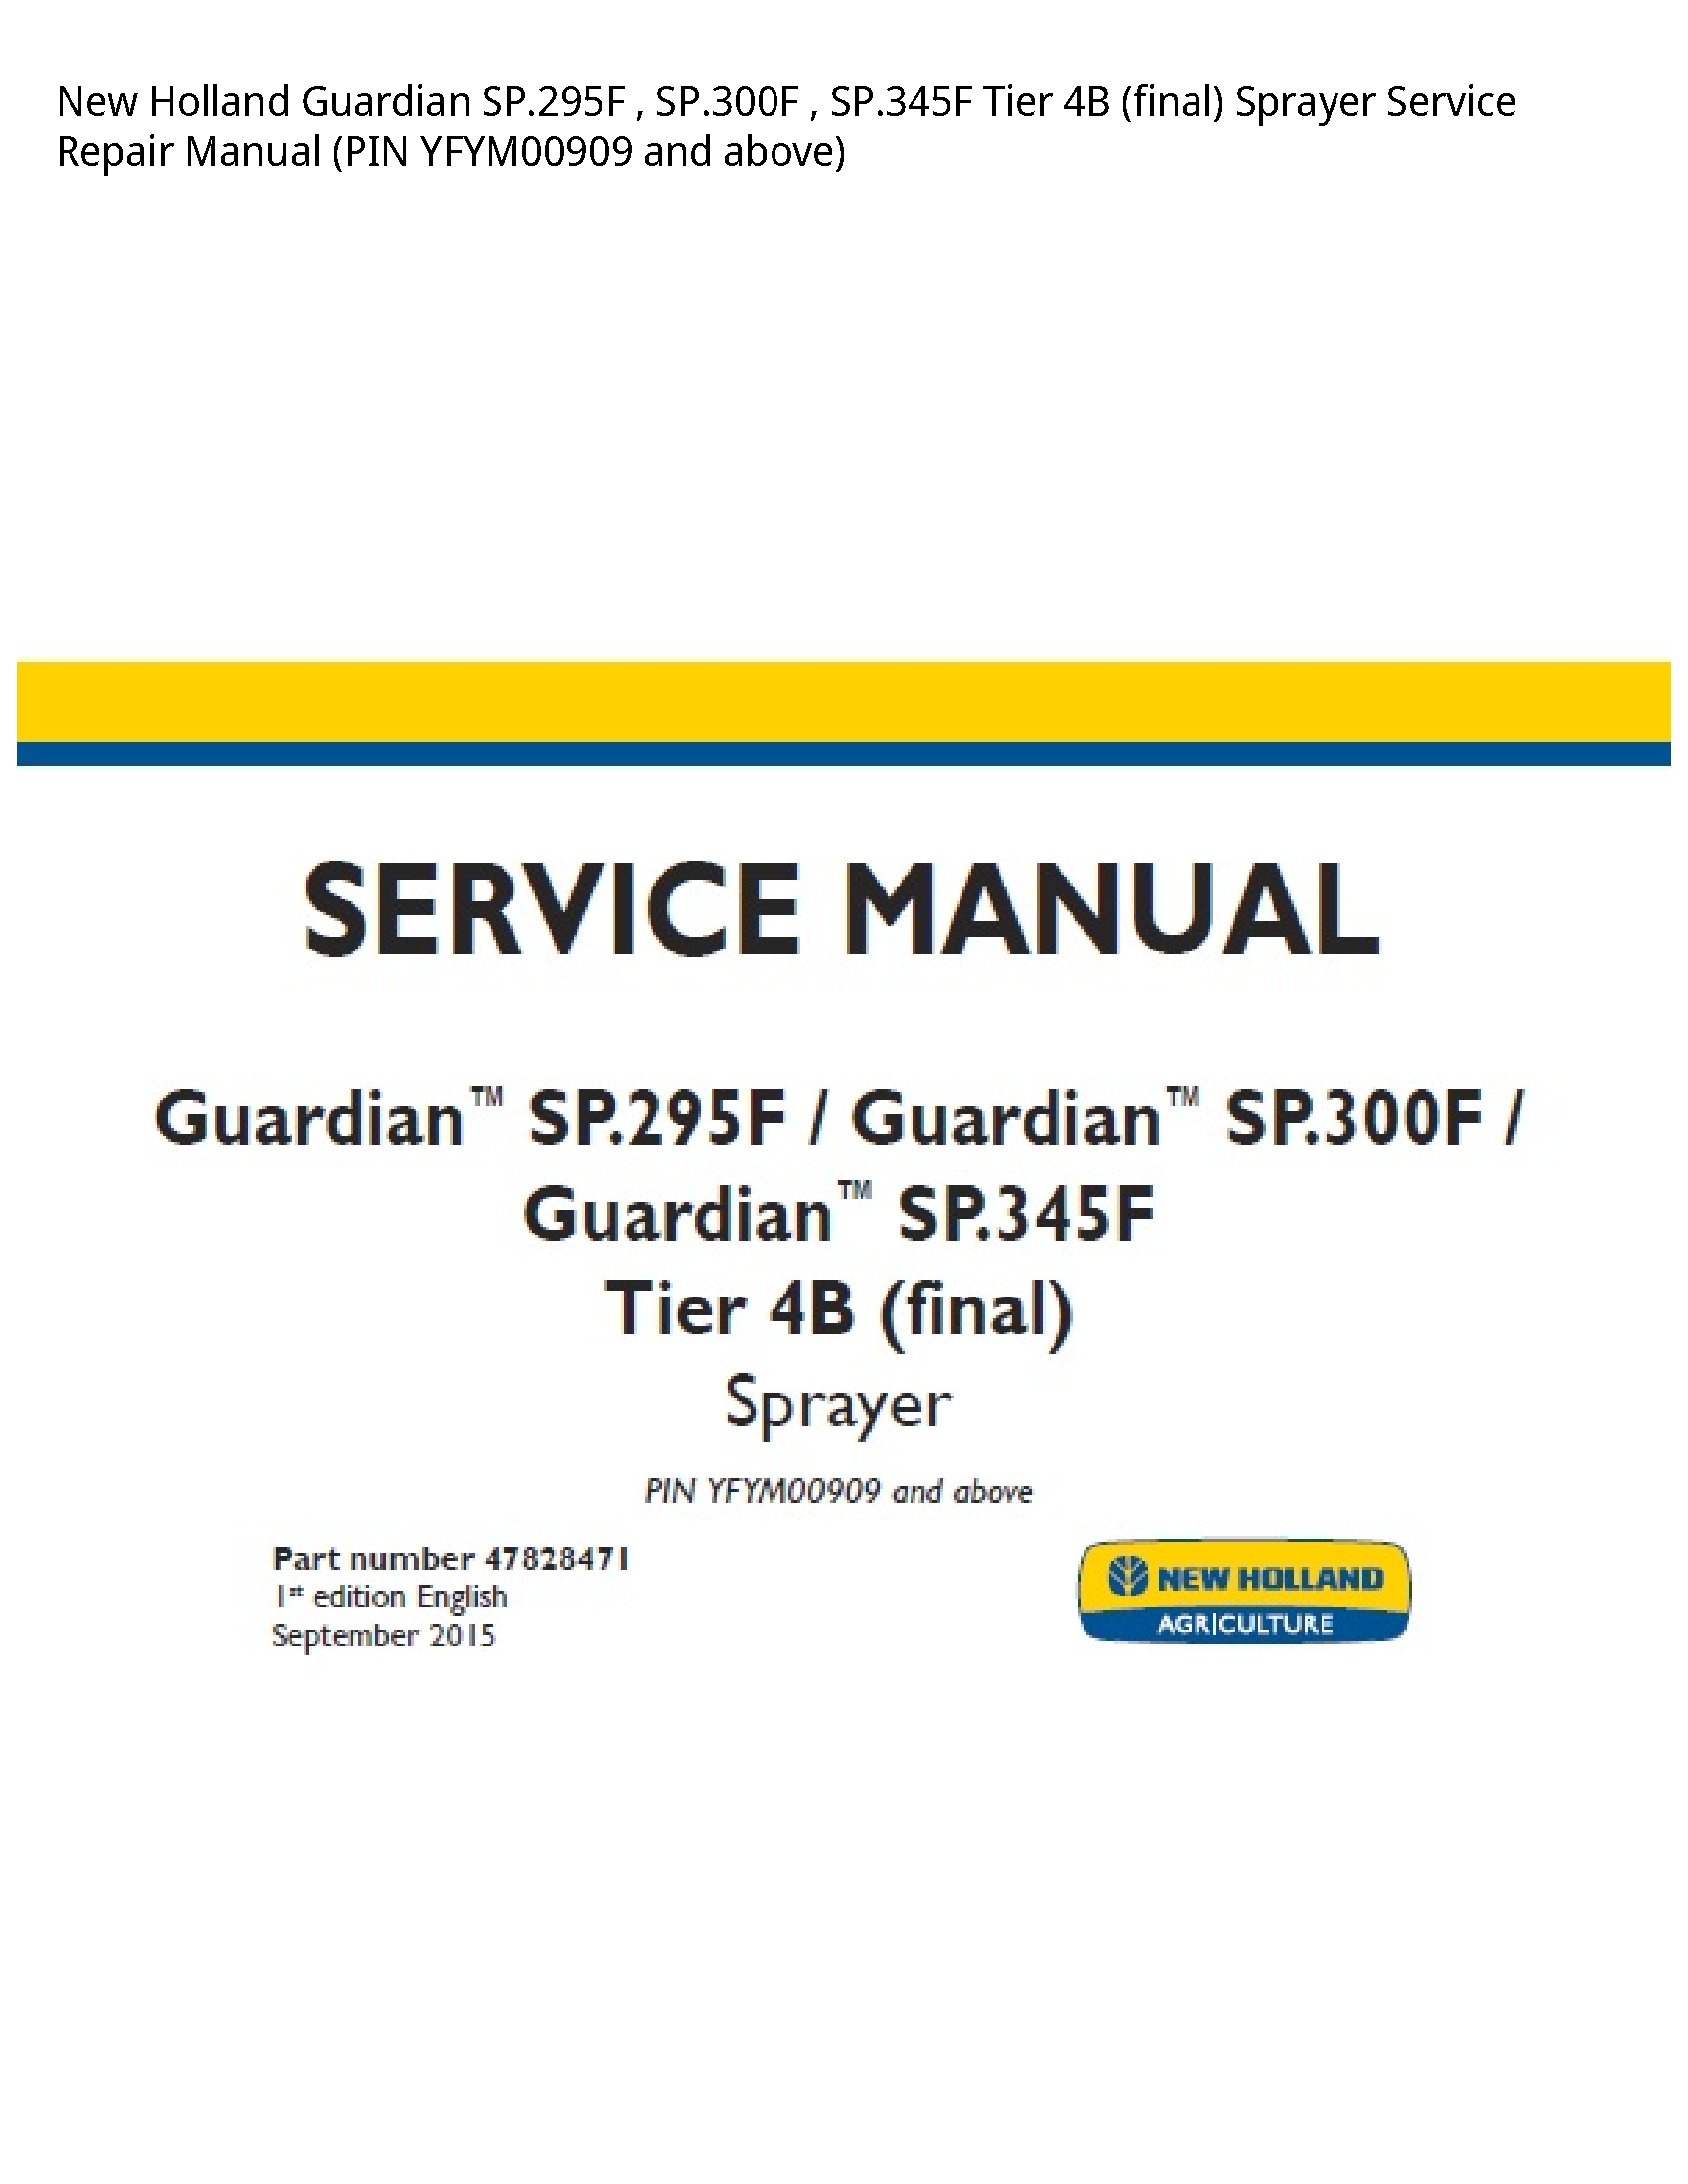 New Holland SP.295F Guardian Tier (final) Sprayer manual